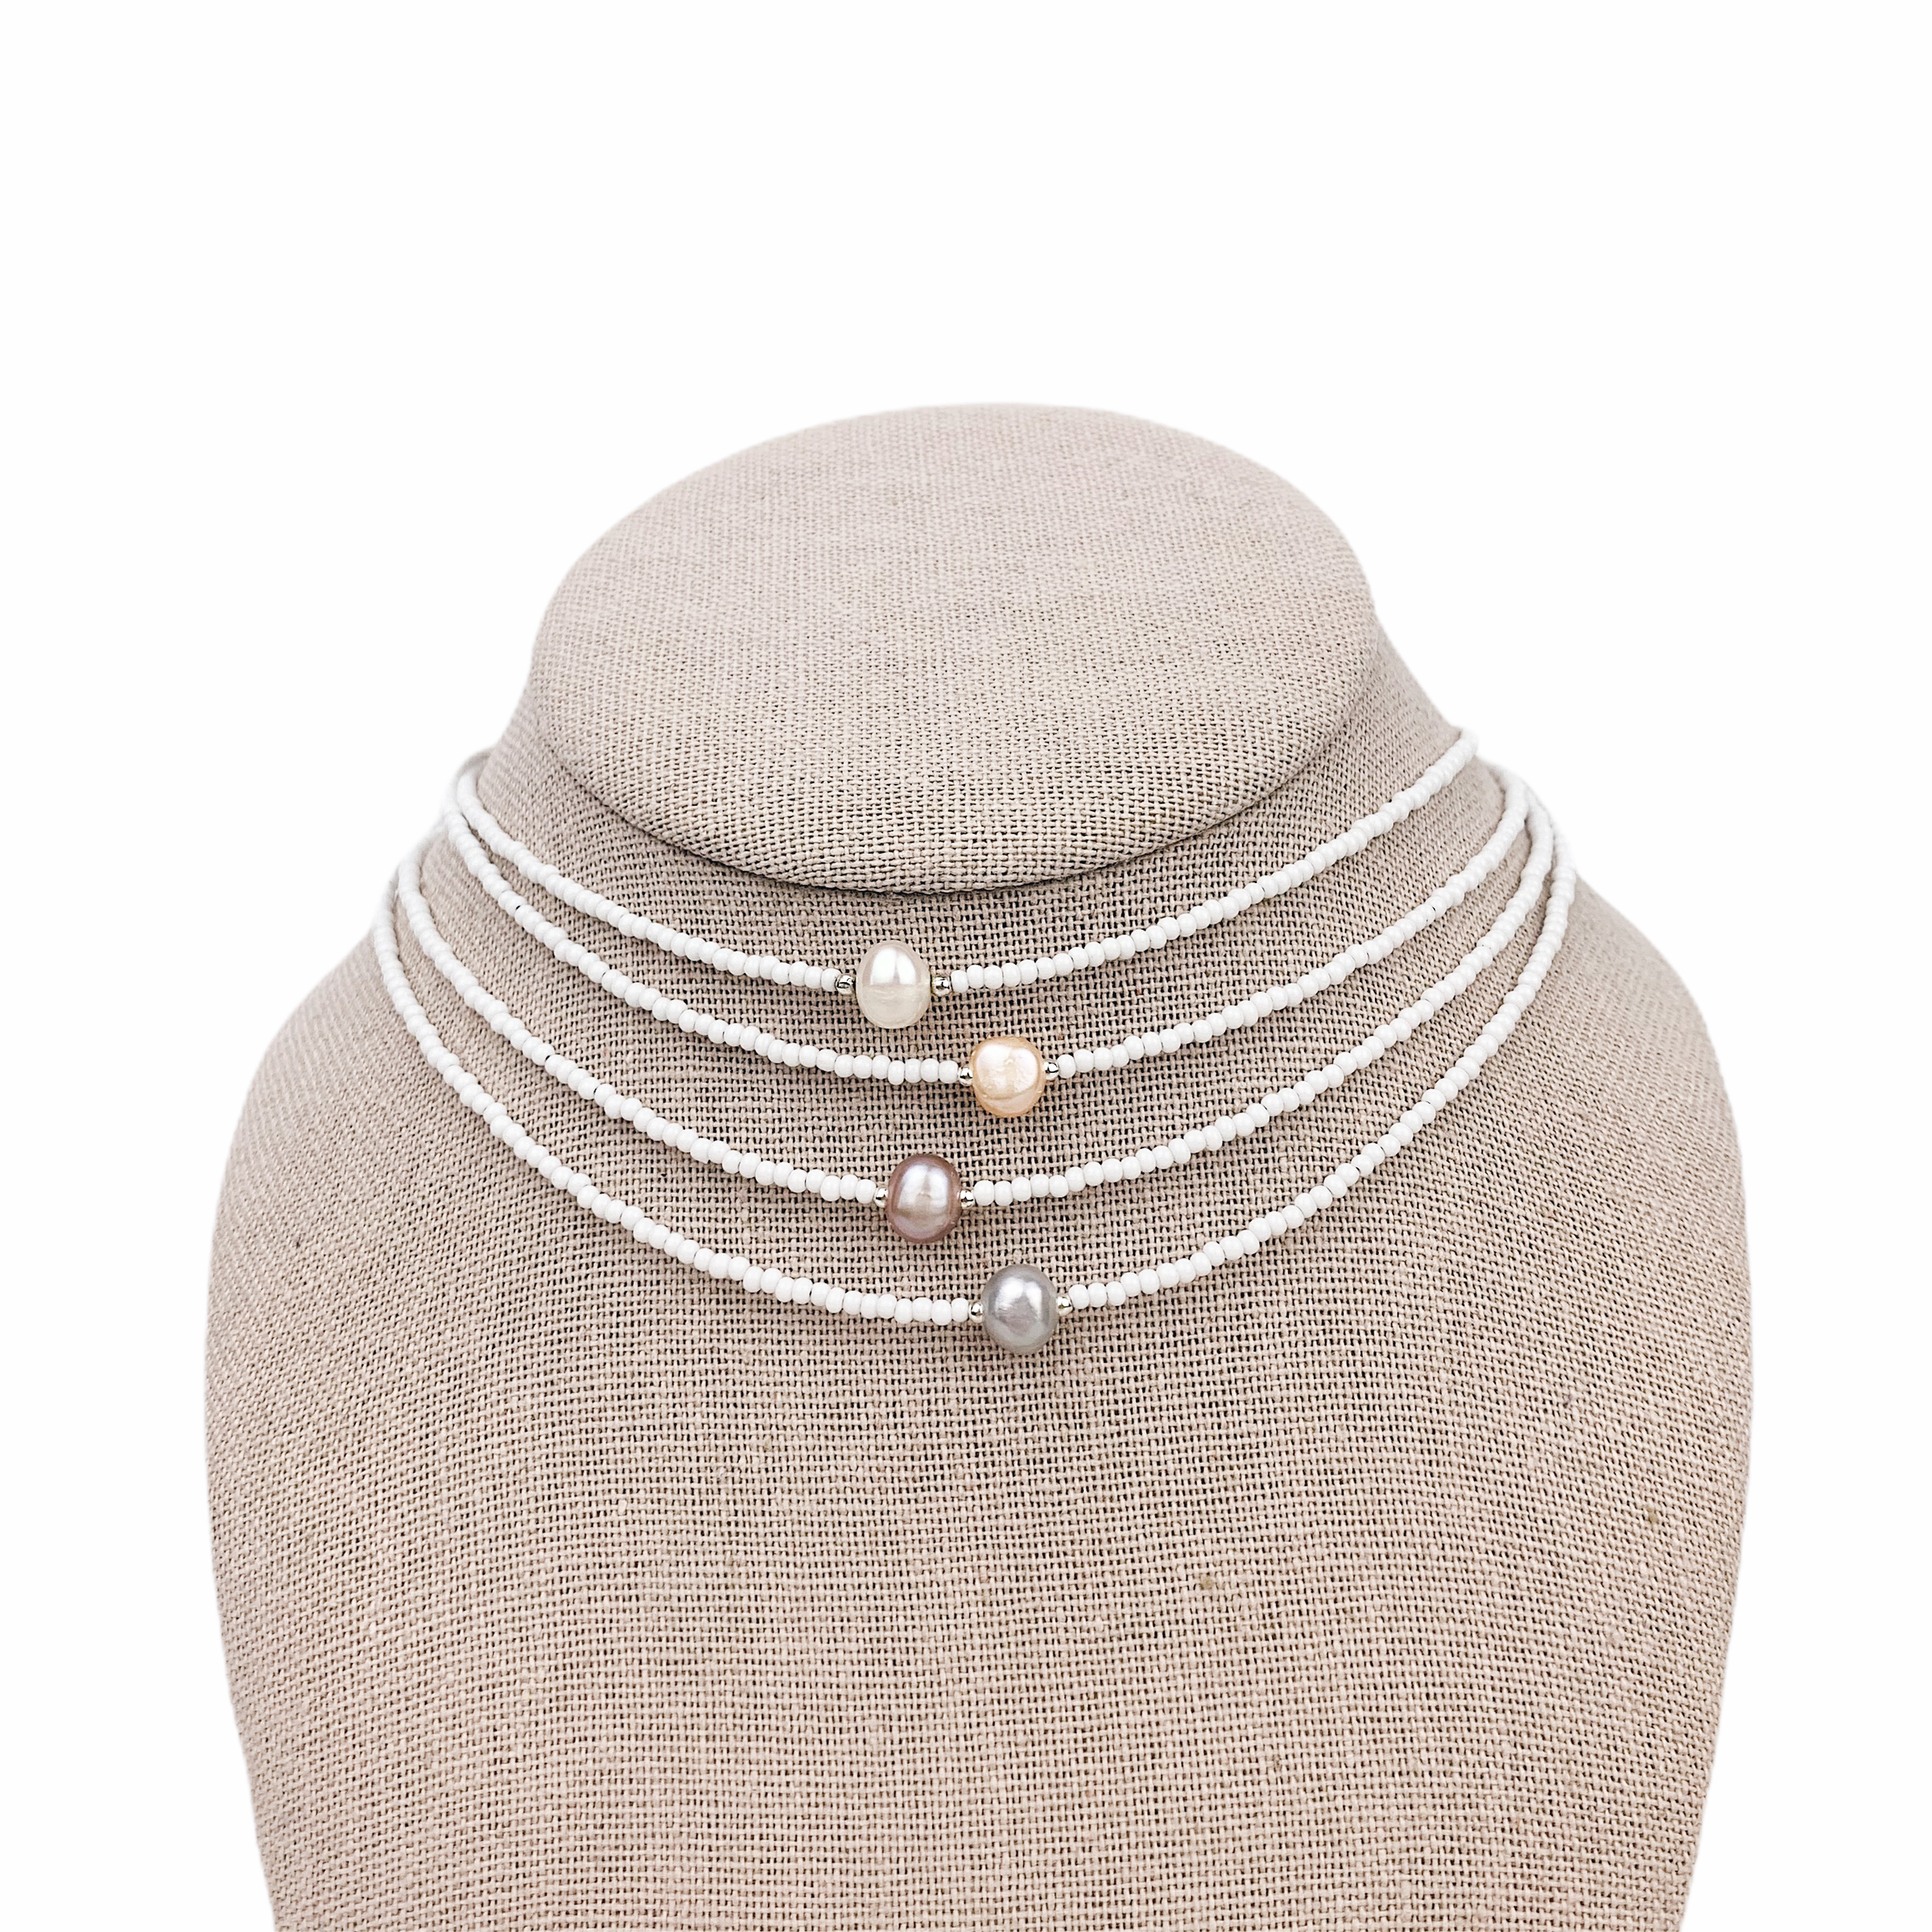 Women Fashion Single Pearl Black Leather Cord Choker Necklace | eBay